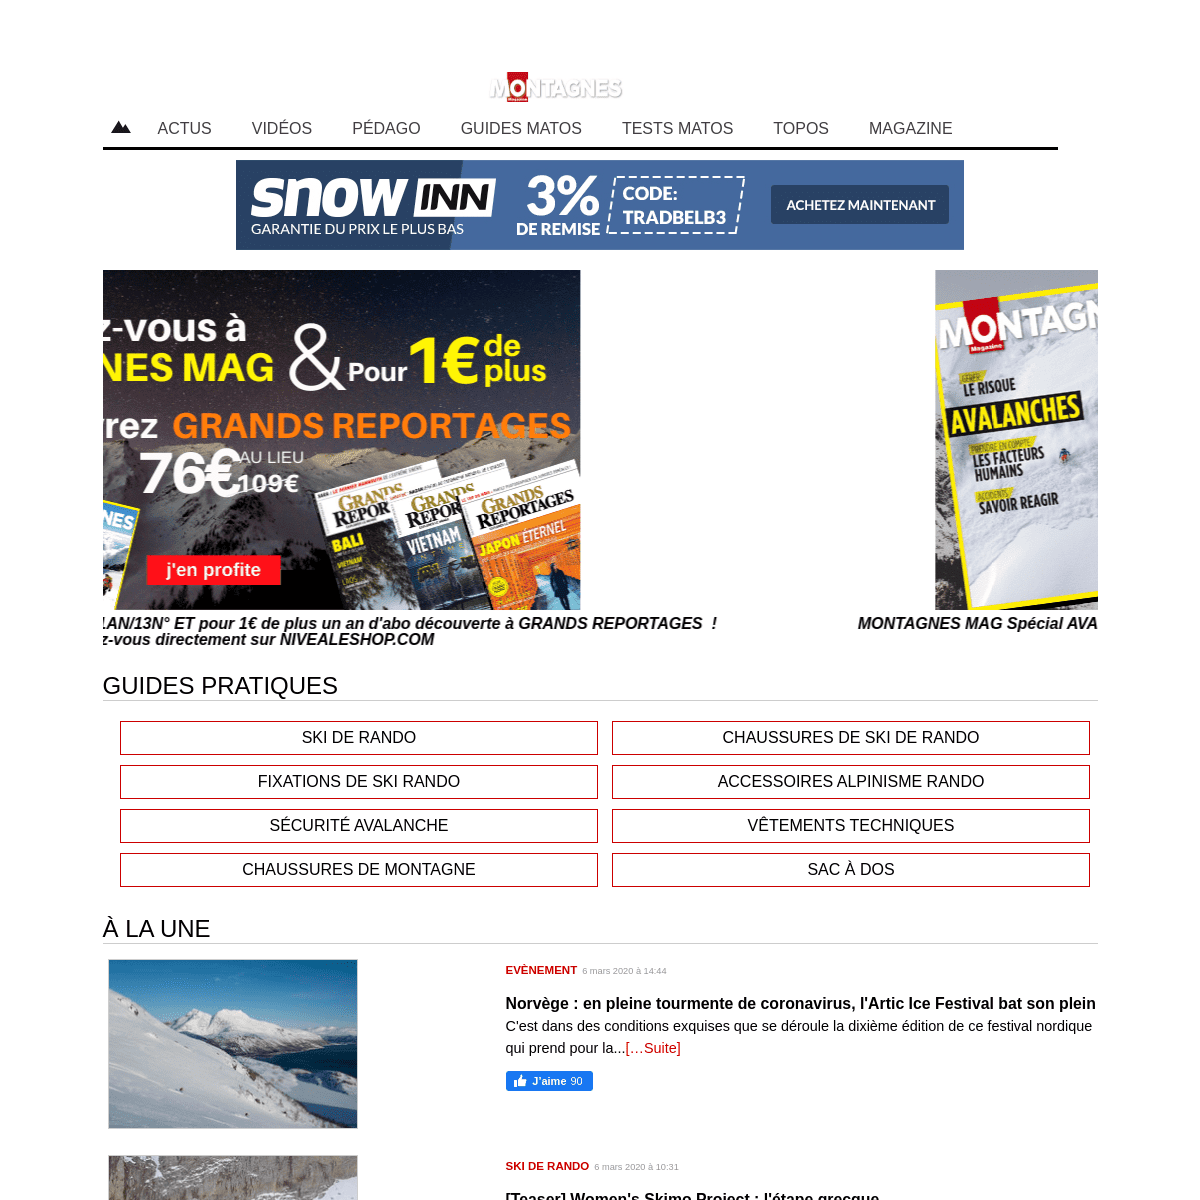 A complete backup of montagnes-magazine.com